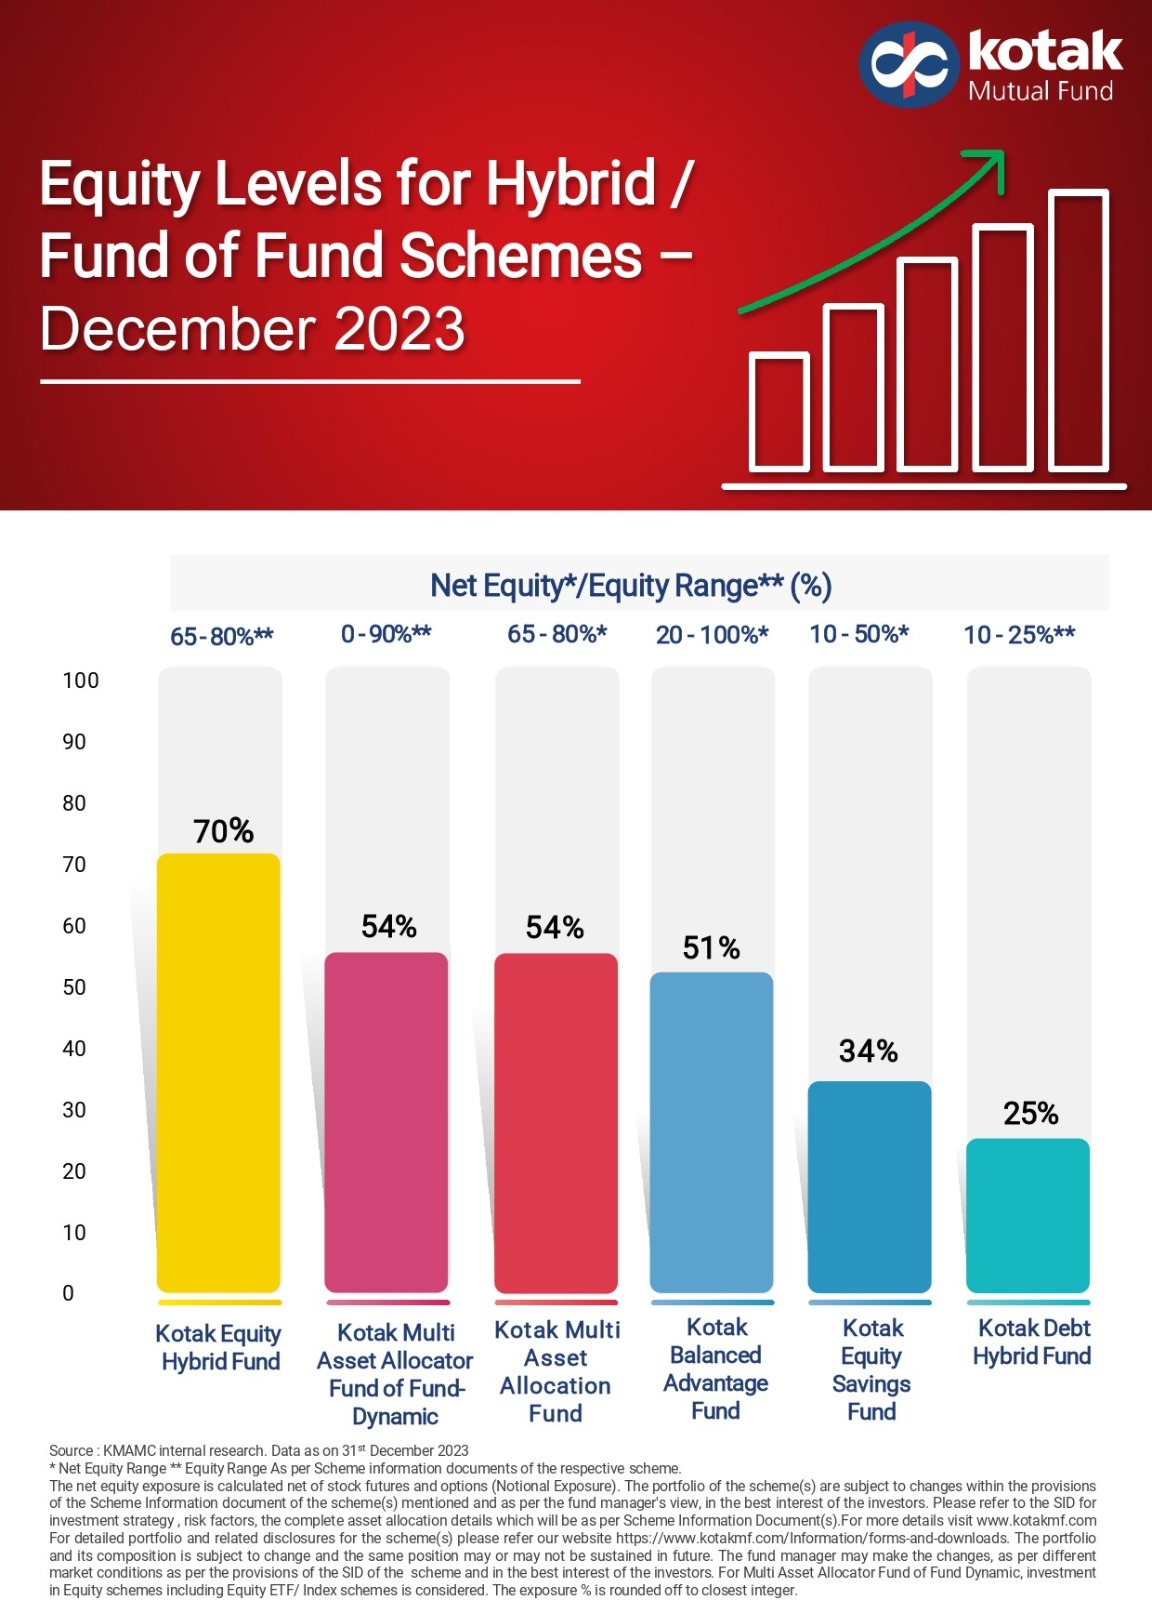 Net Equity Levels in Kotak MF Hybrid Funds